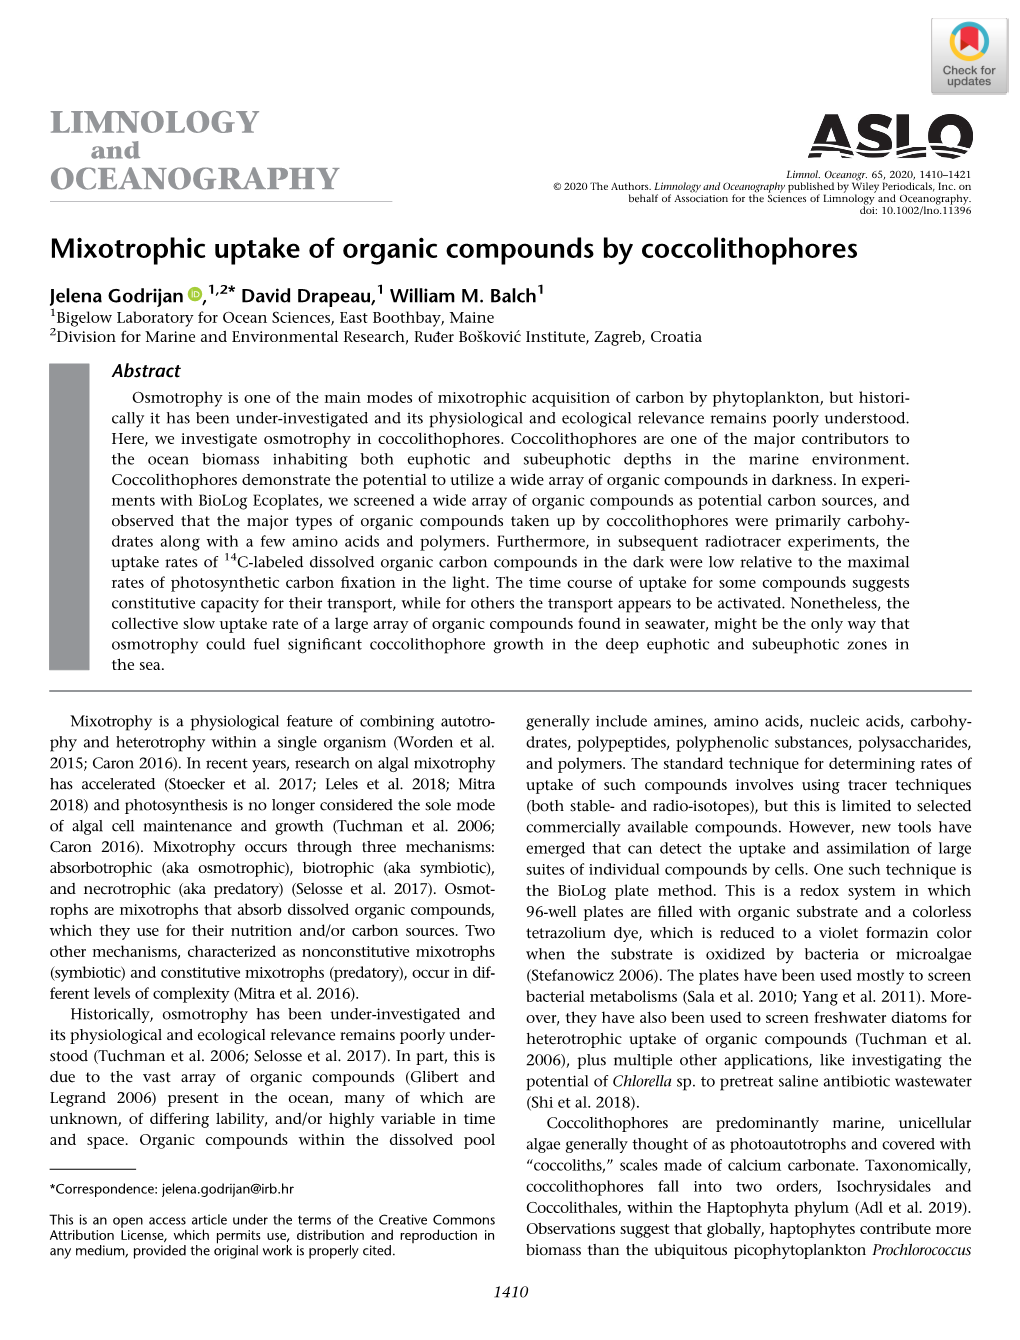 Mixotrophic Uptake of Organic Compounds by Coccolithophores